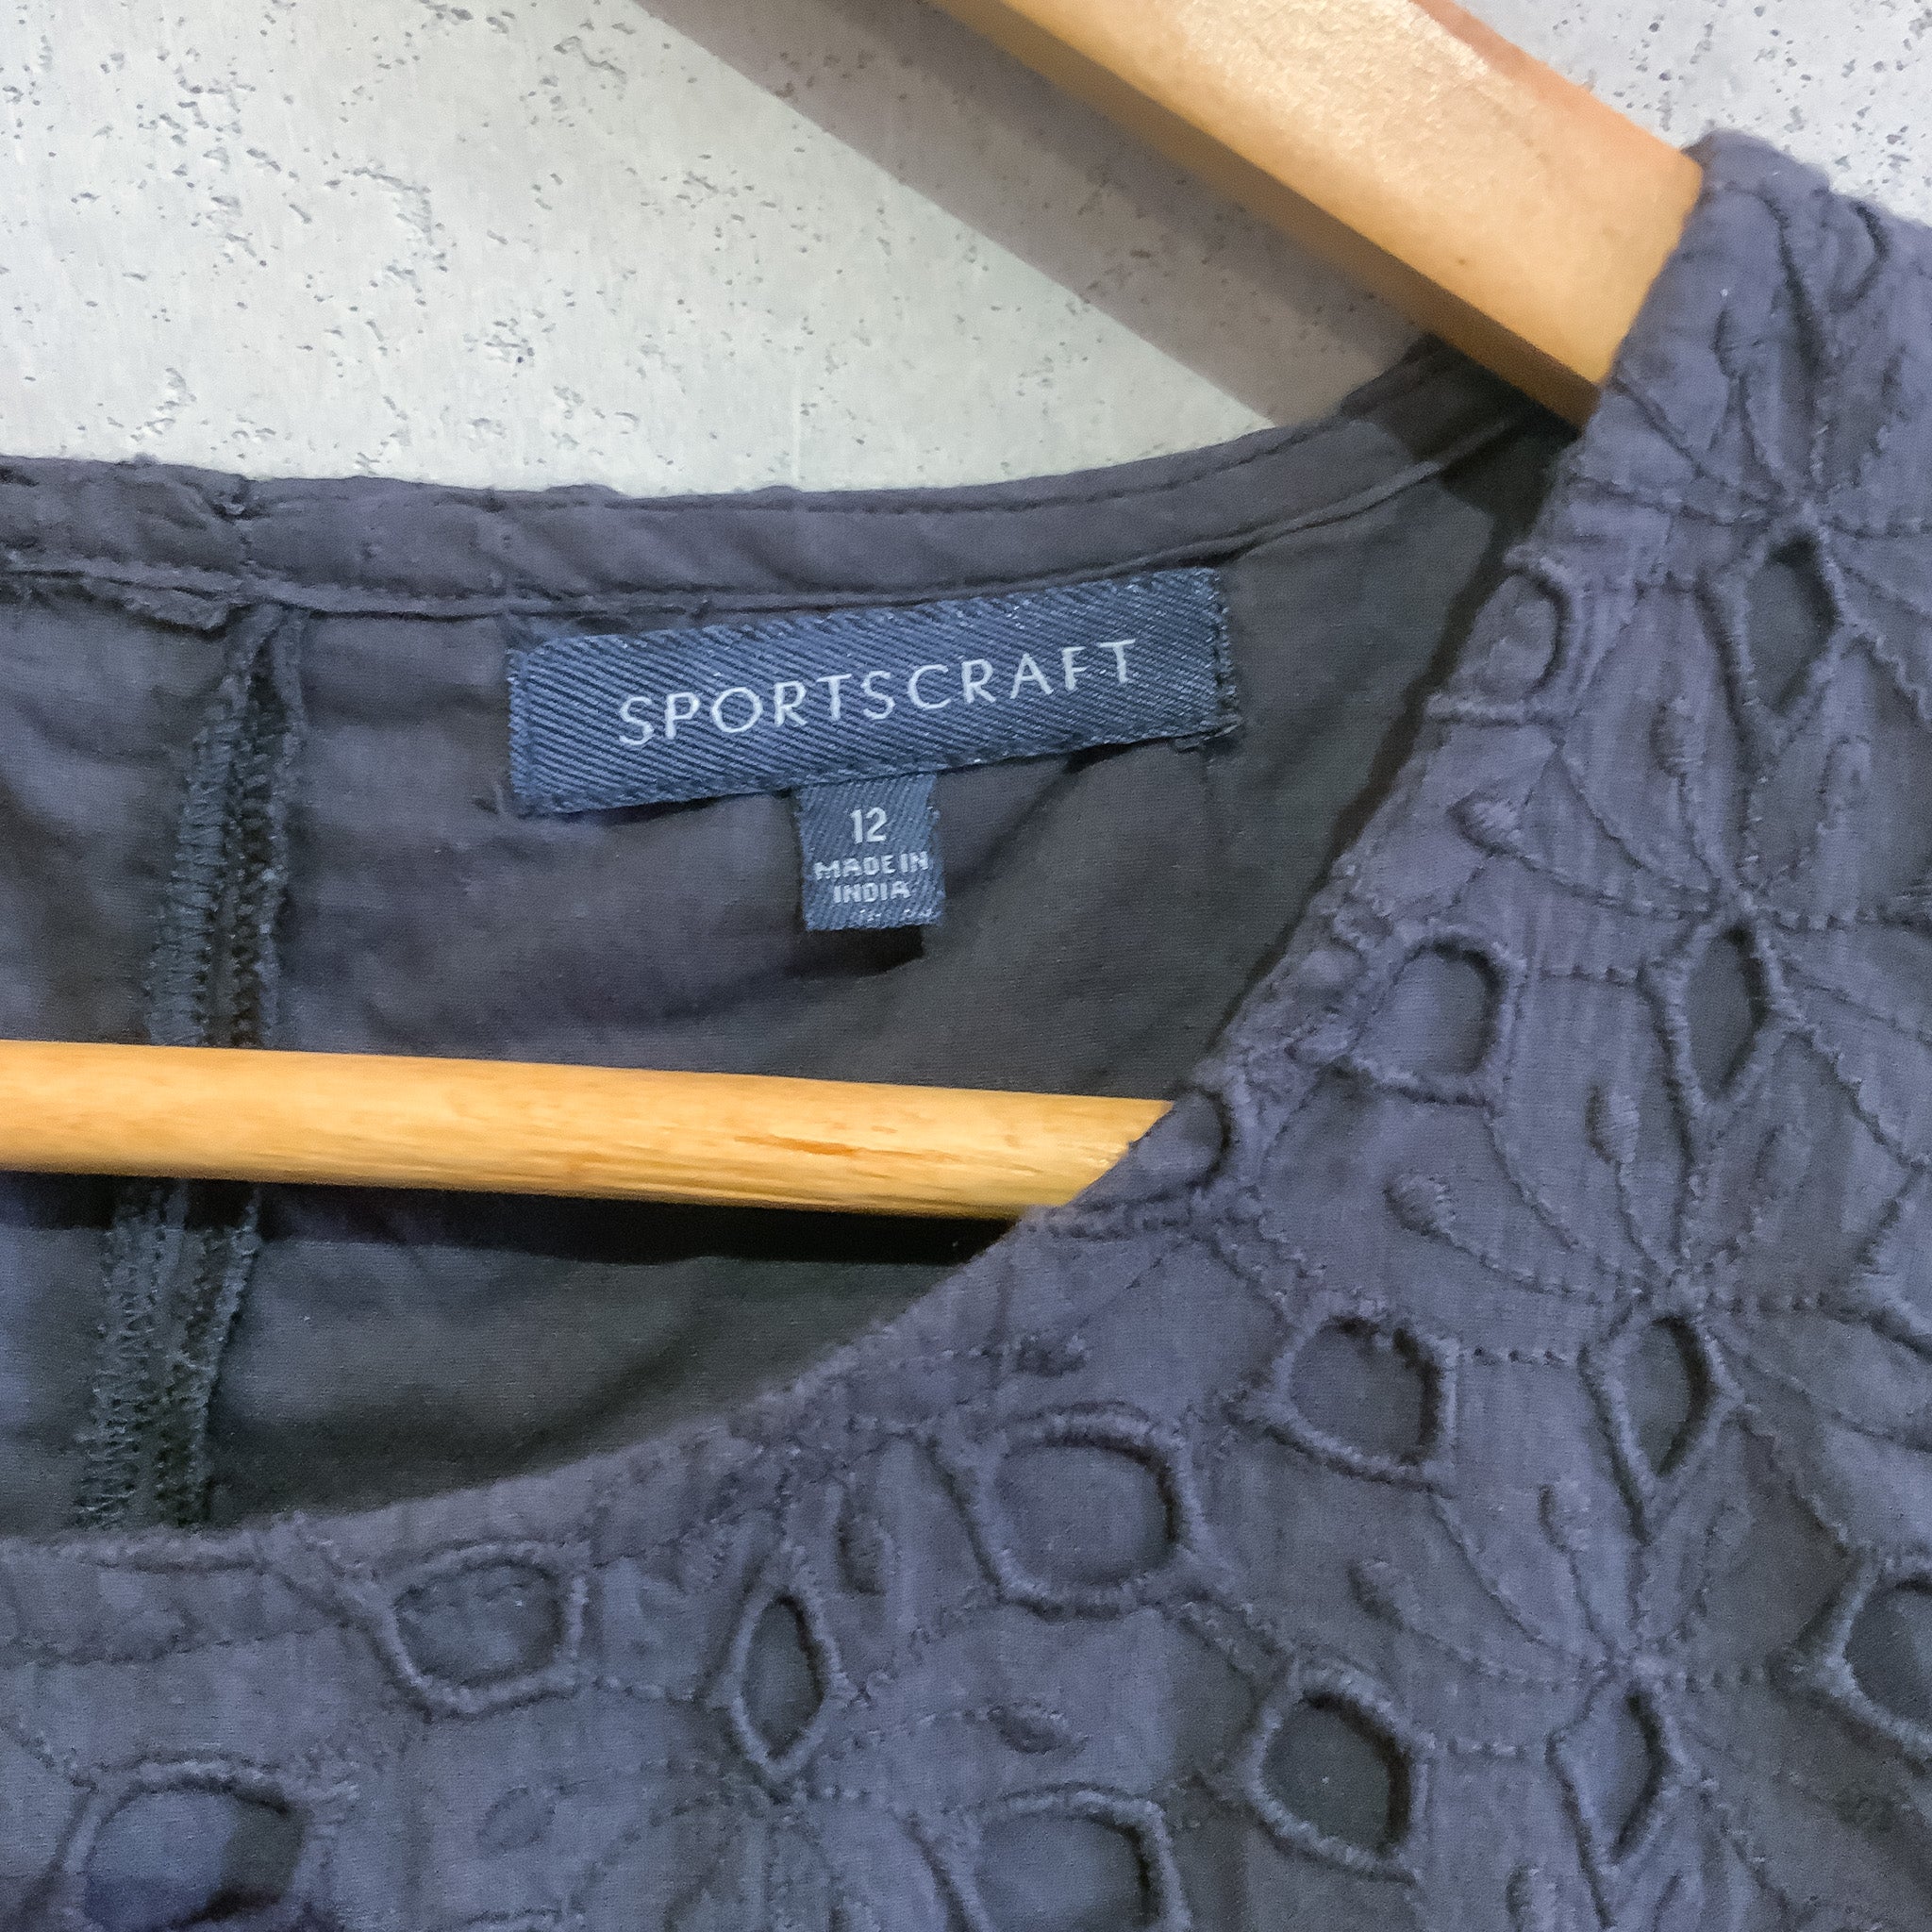 SPORTSCRAFT Charcoal Grey Sleeveless Lazer Cut Knee Length Dress - Size 12